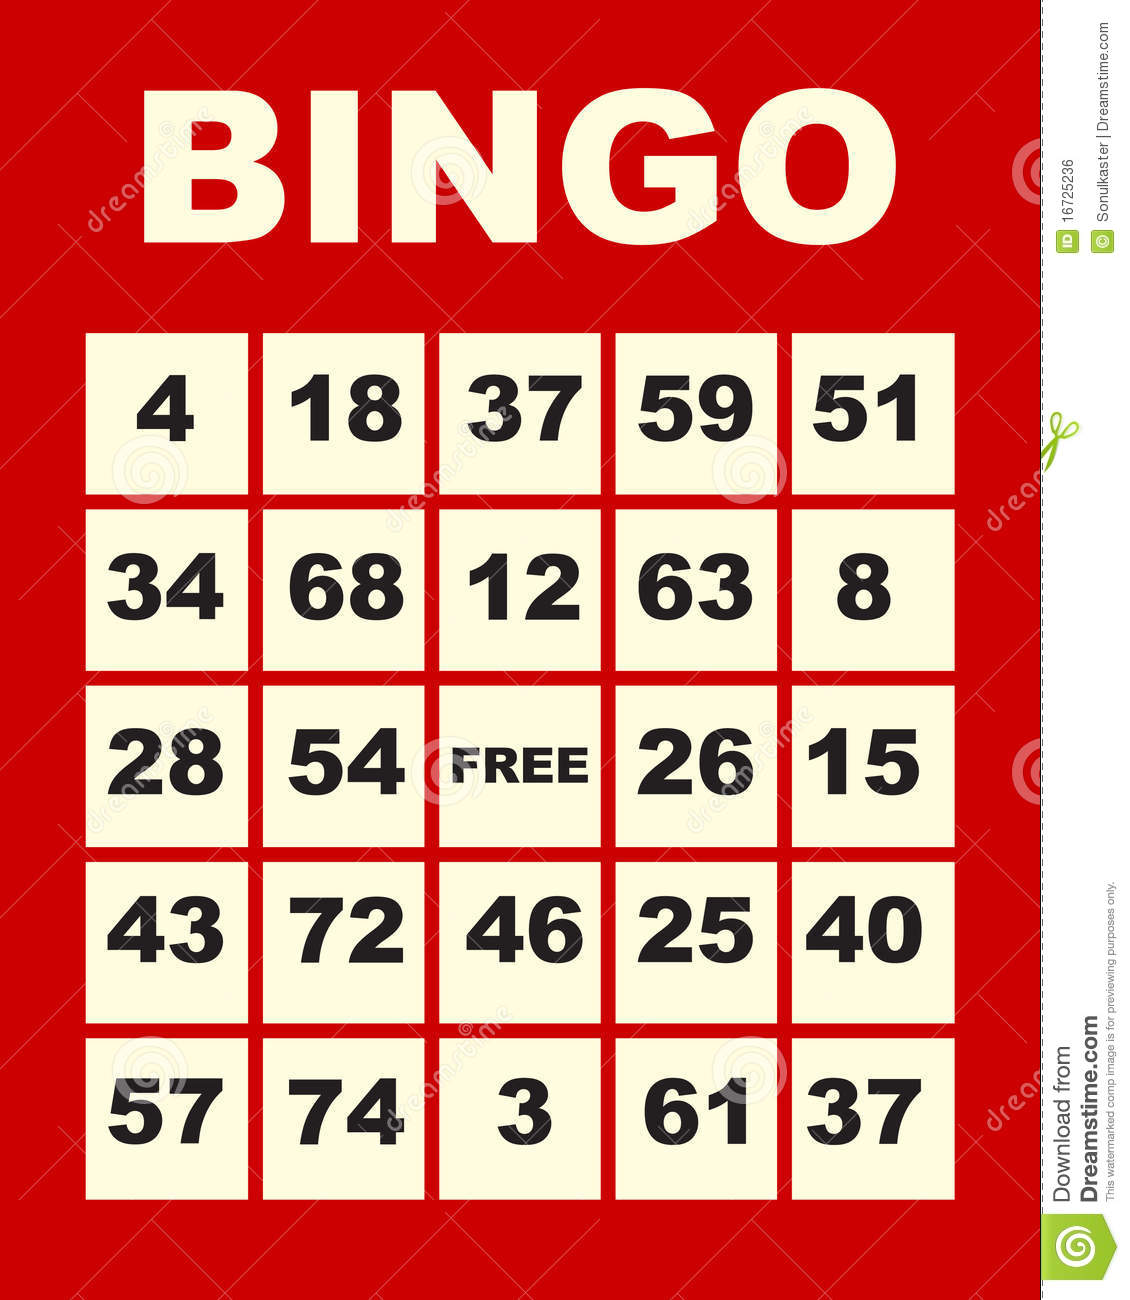 Bingo Card Royalty Free Stock Image   Image  16725236